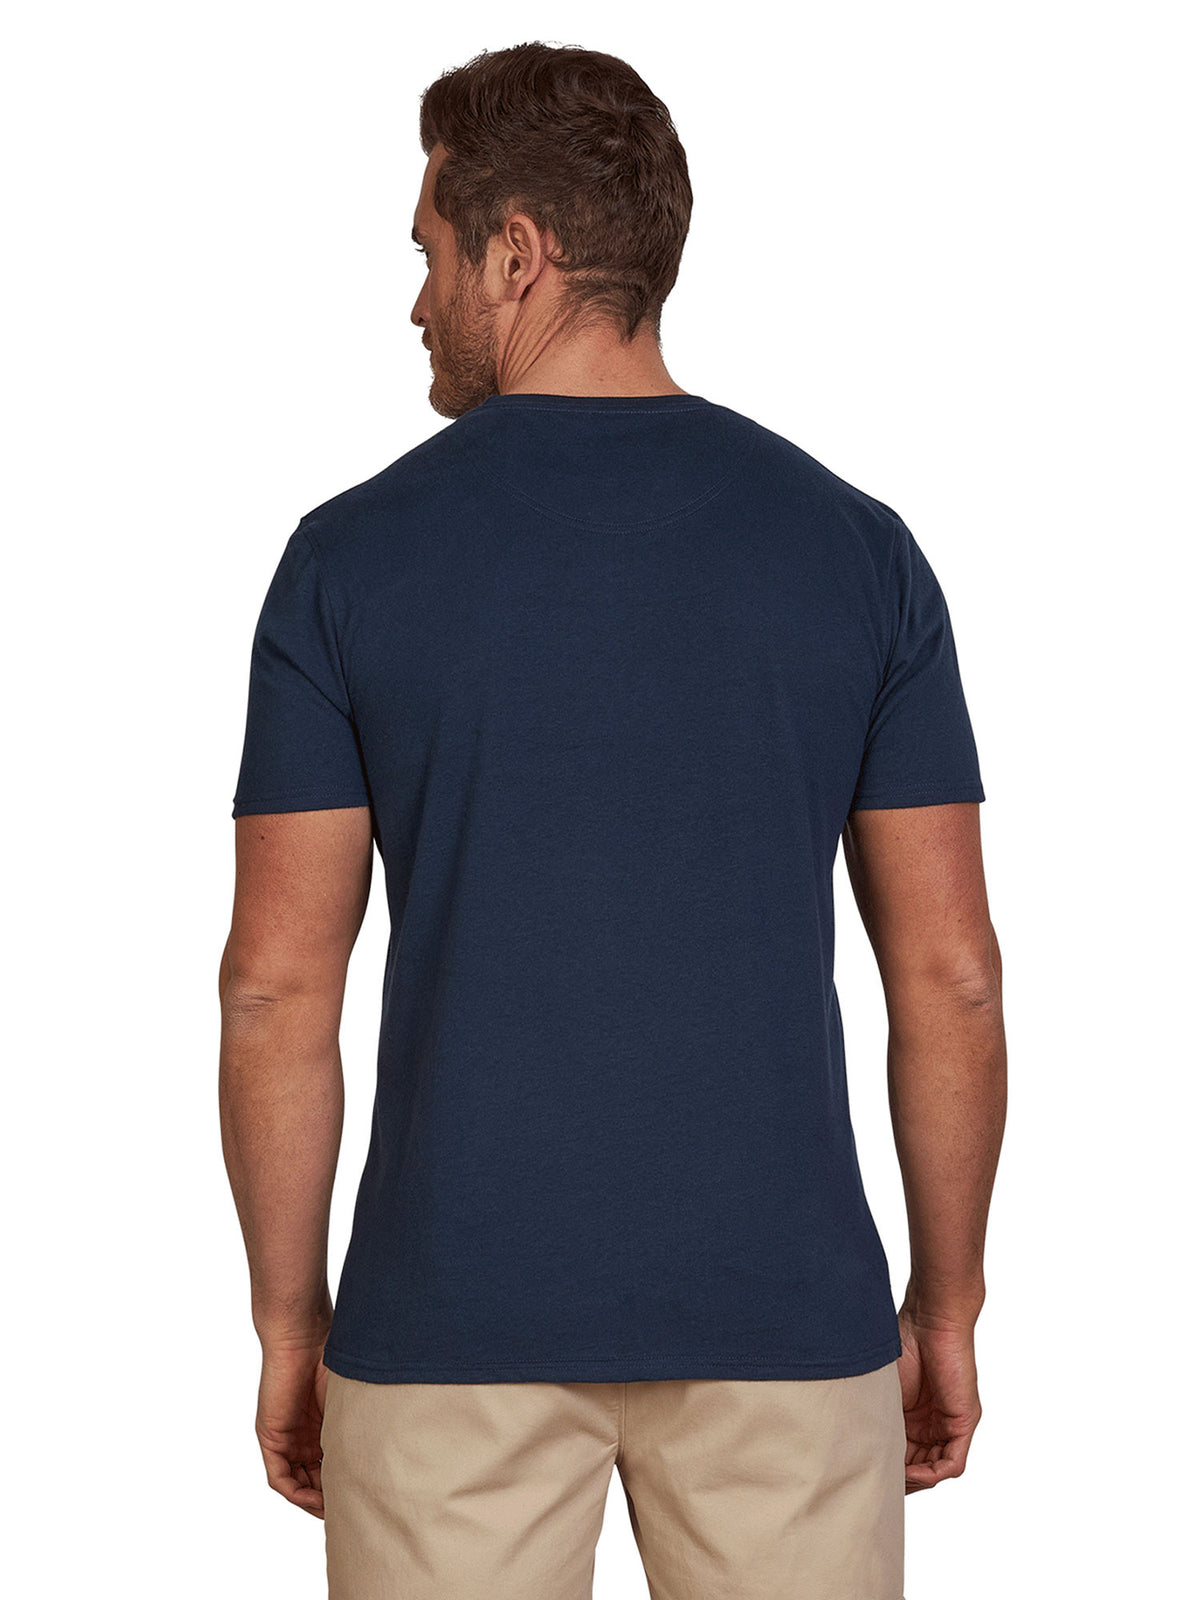 Scatter Stitch T-Shirt - Navy